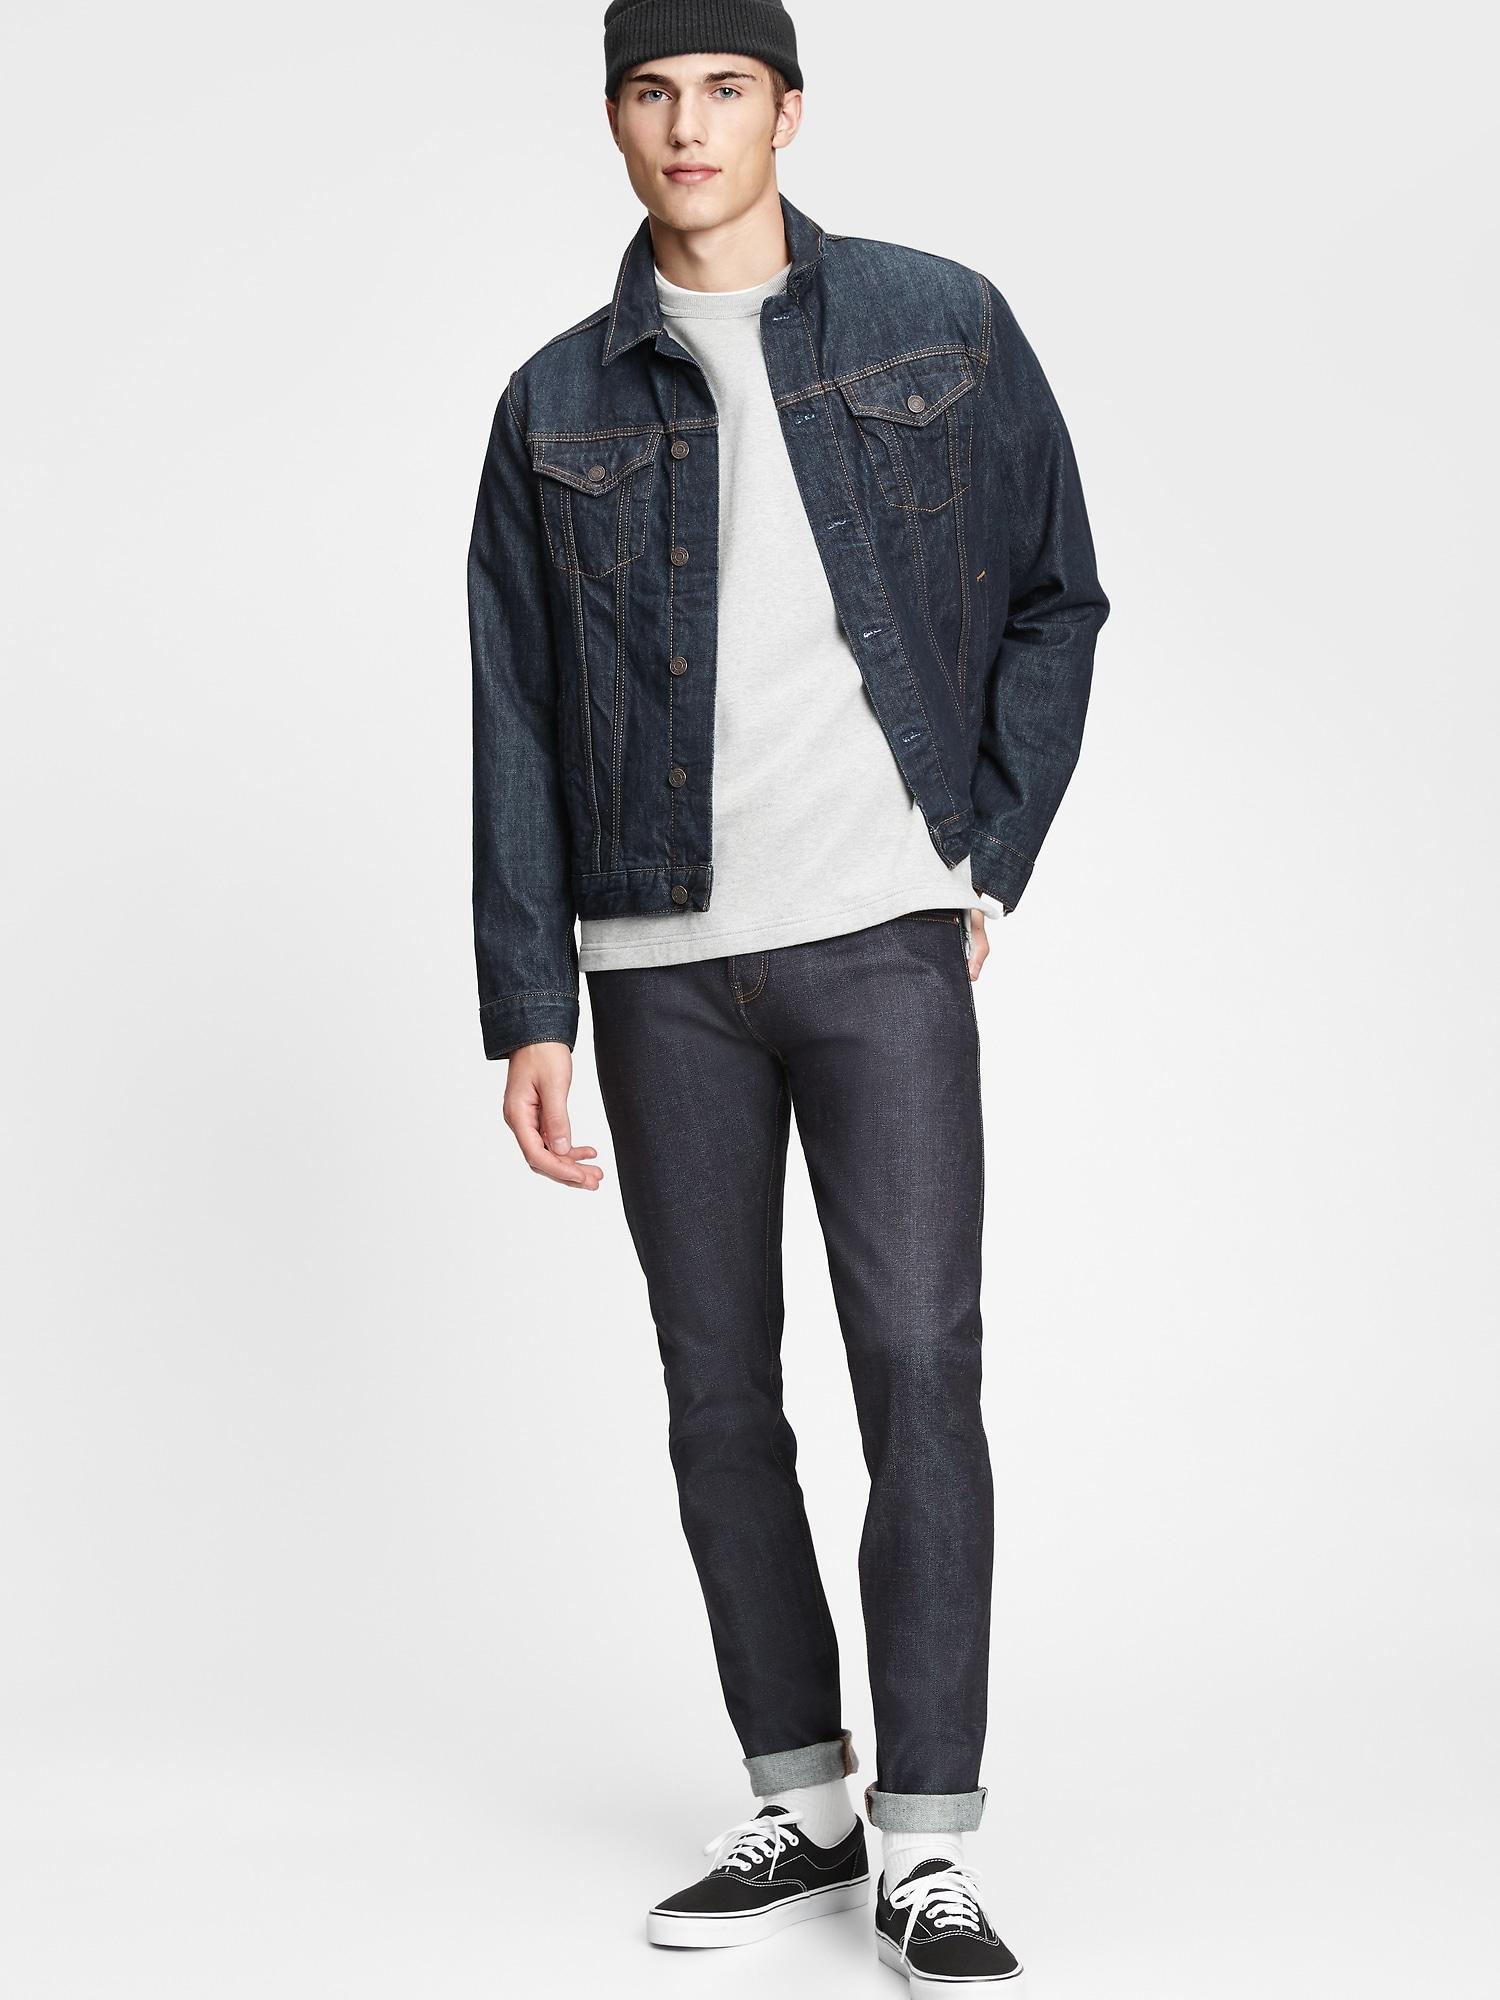 Gap Denim Selvedge Skinny Jeans With Flex in Blue for Men - Lyst